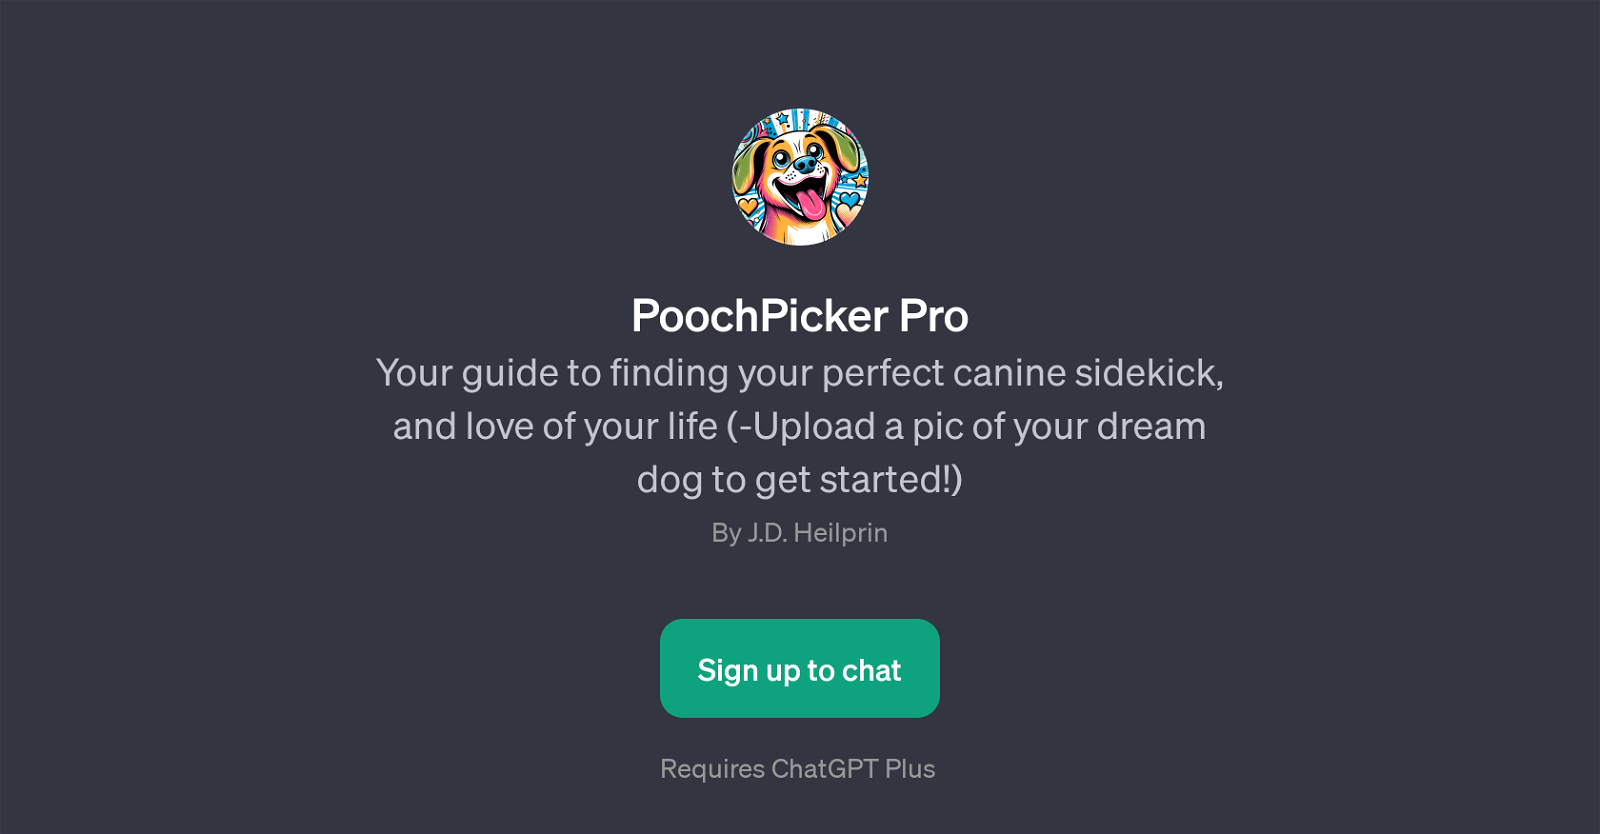 PoochPicker Pro website